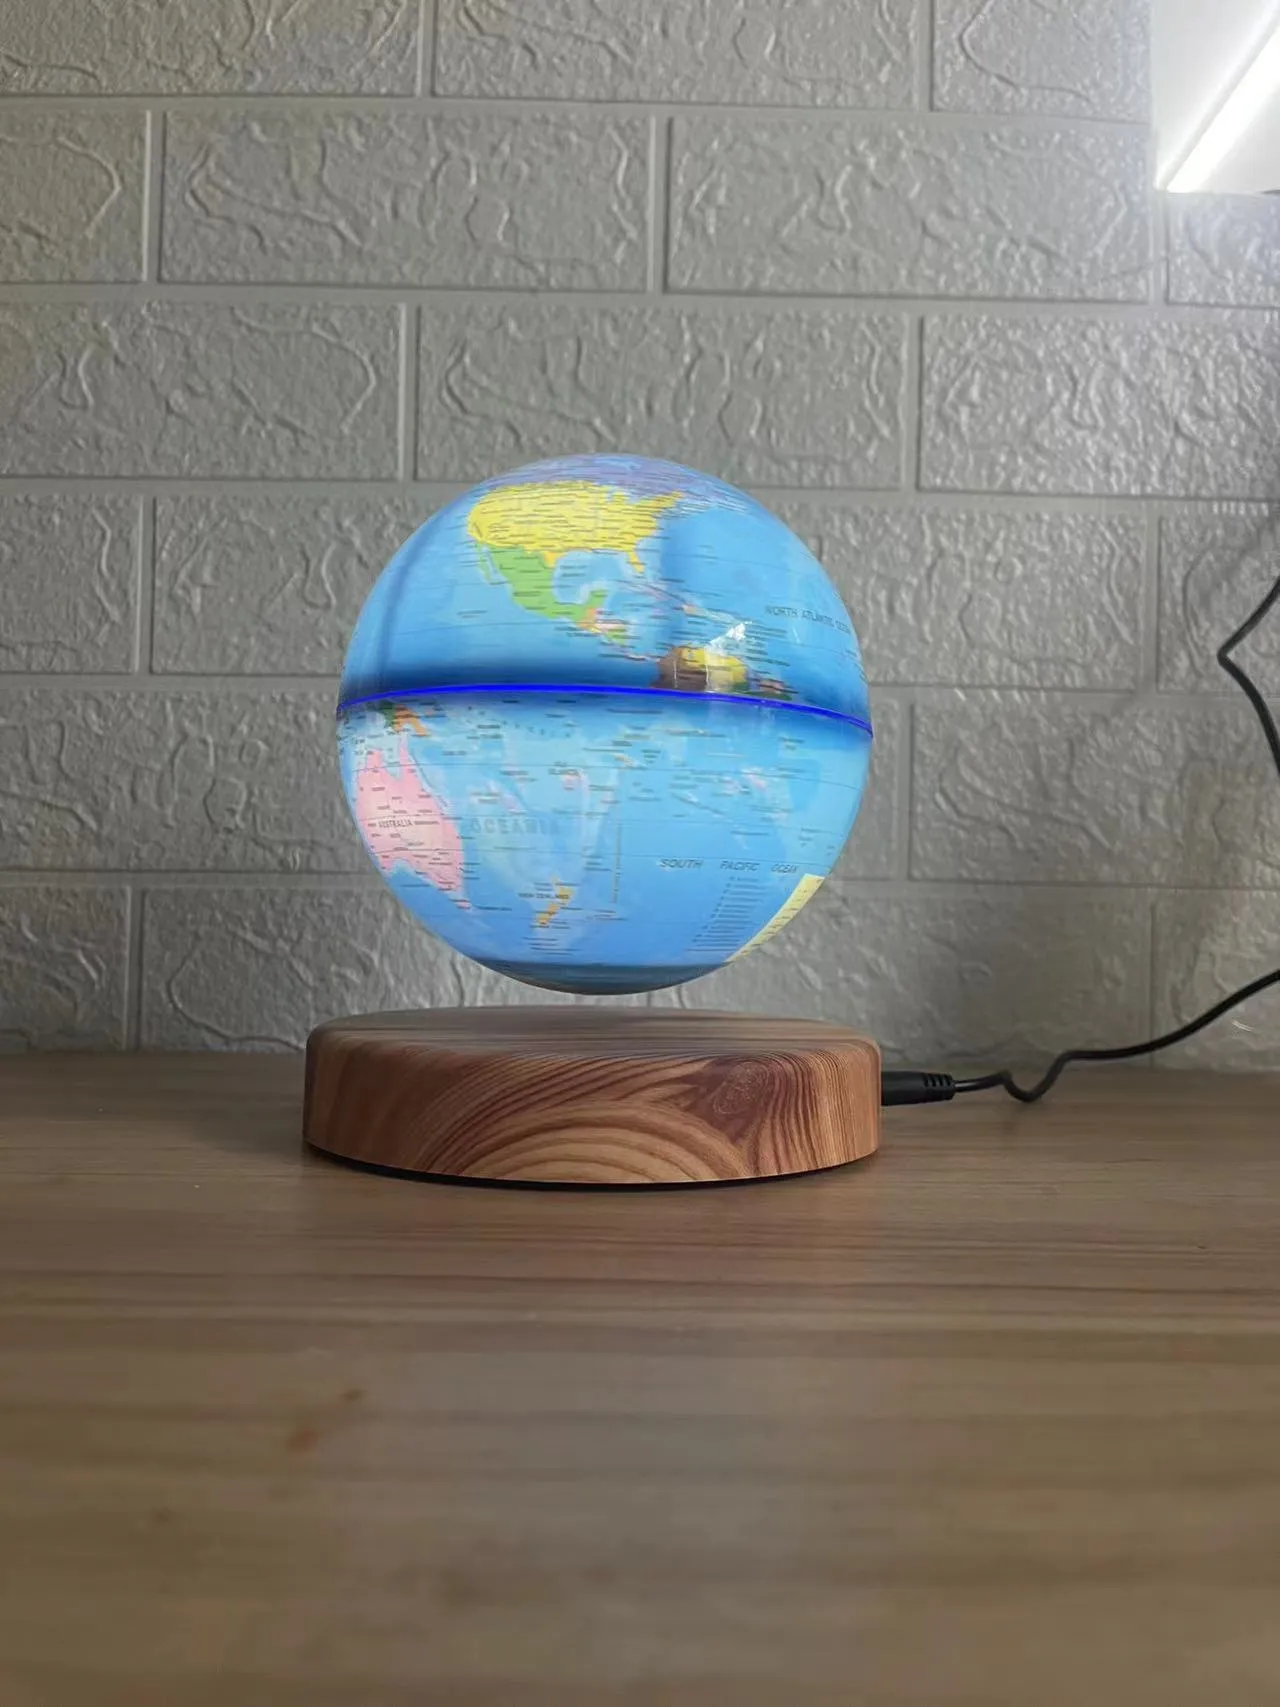 6'' Magnetic Levitation Floating Globe Anti Gravity Rotating World Map with  LED Light for Children Educational Gift Home Office Desk Decoration (Blue)